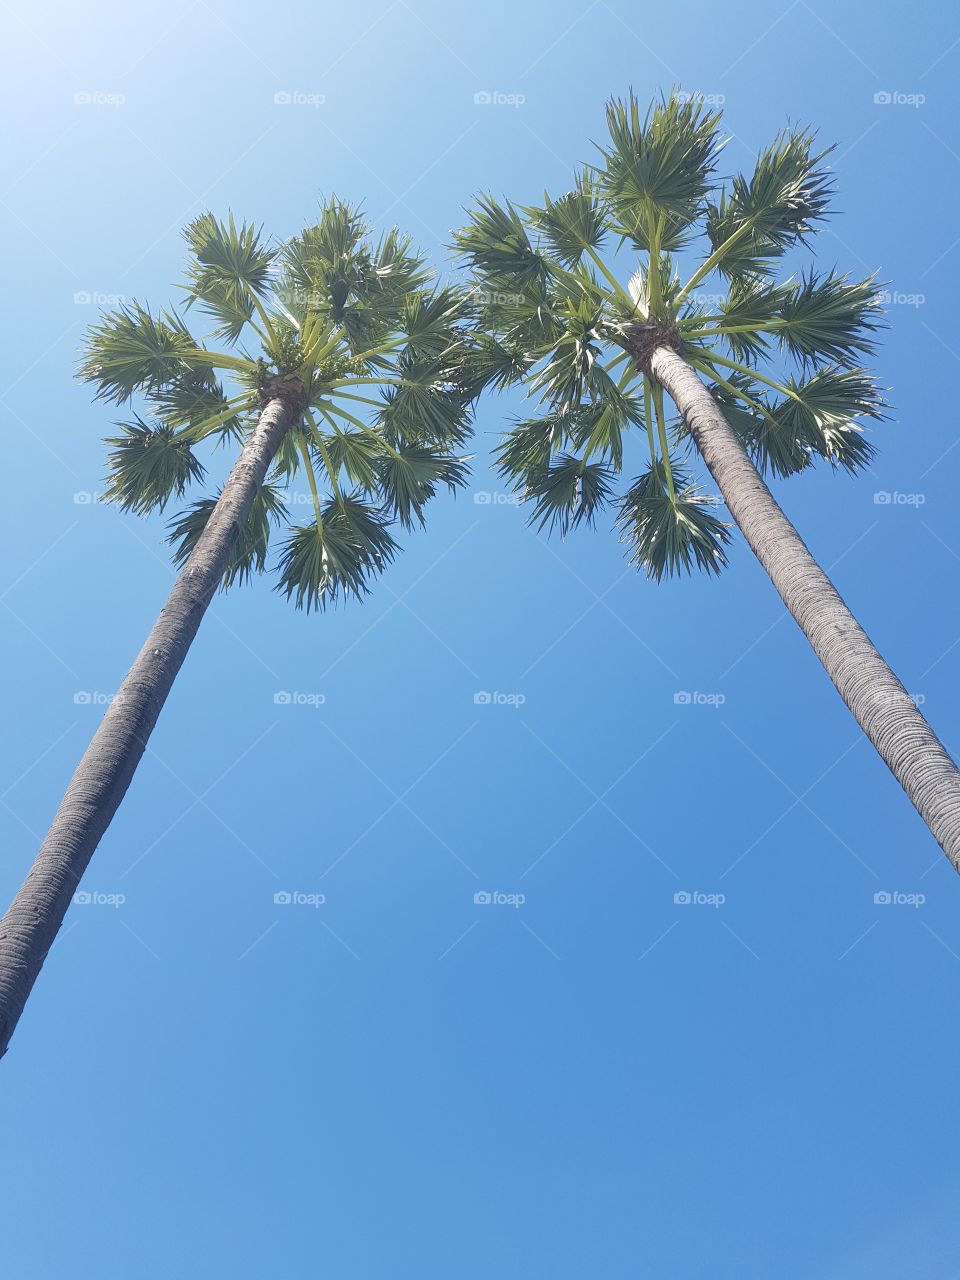 dream vacation destination scenery sugar palm trees on blue sky